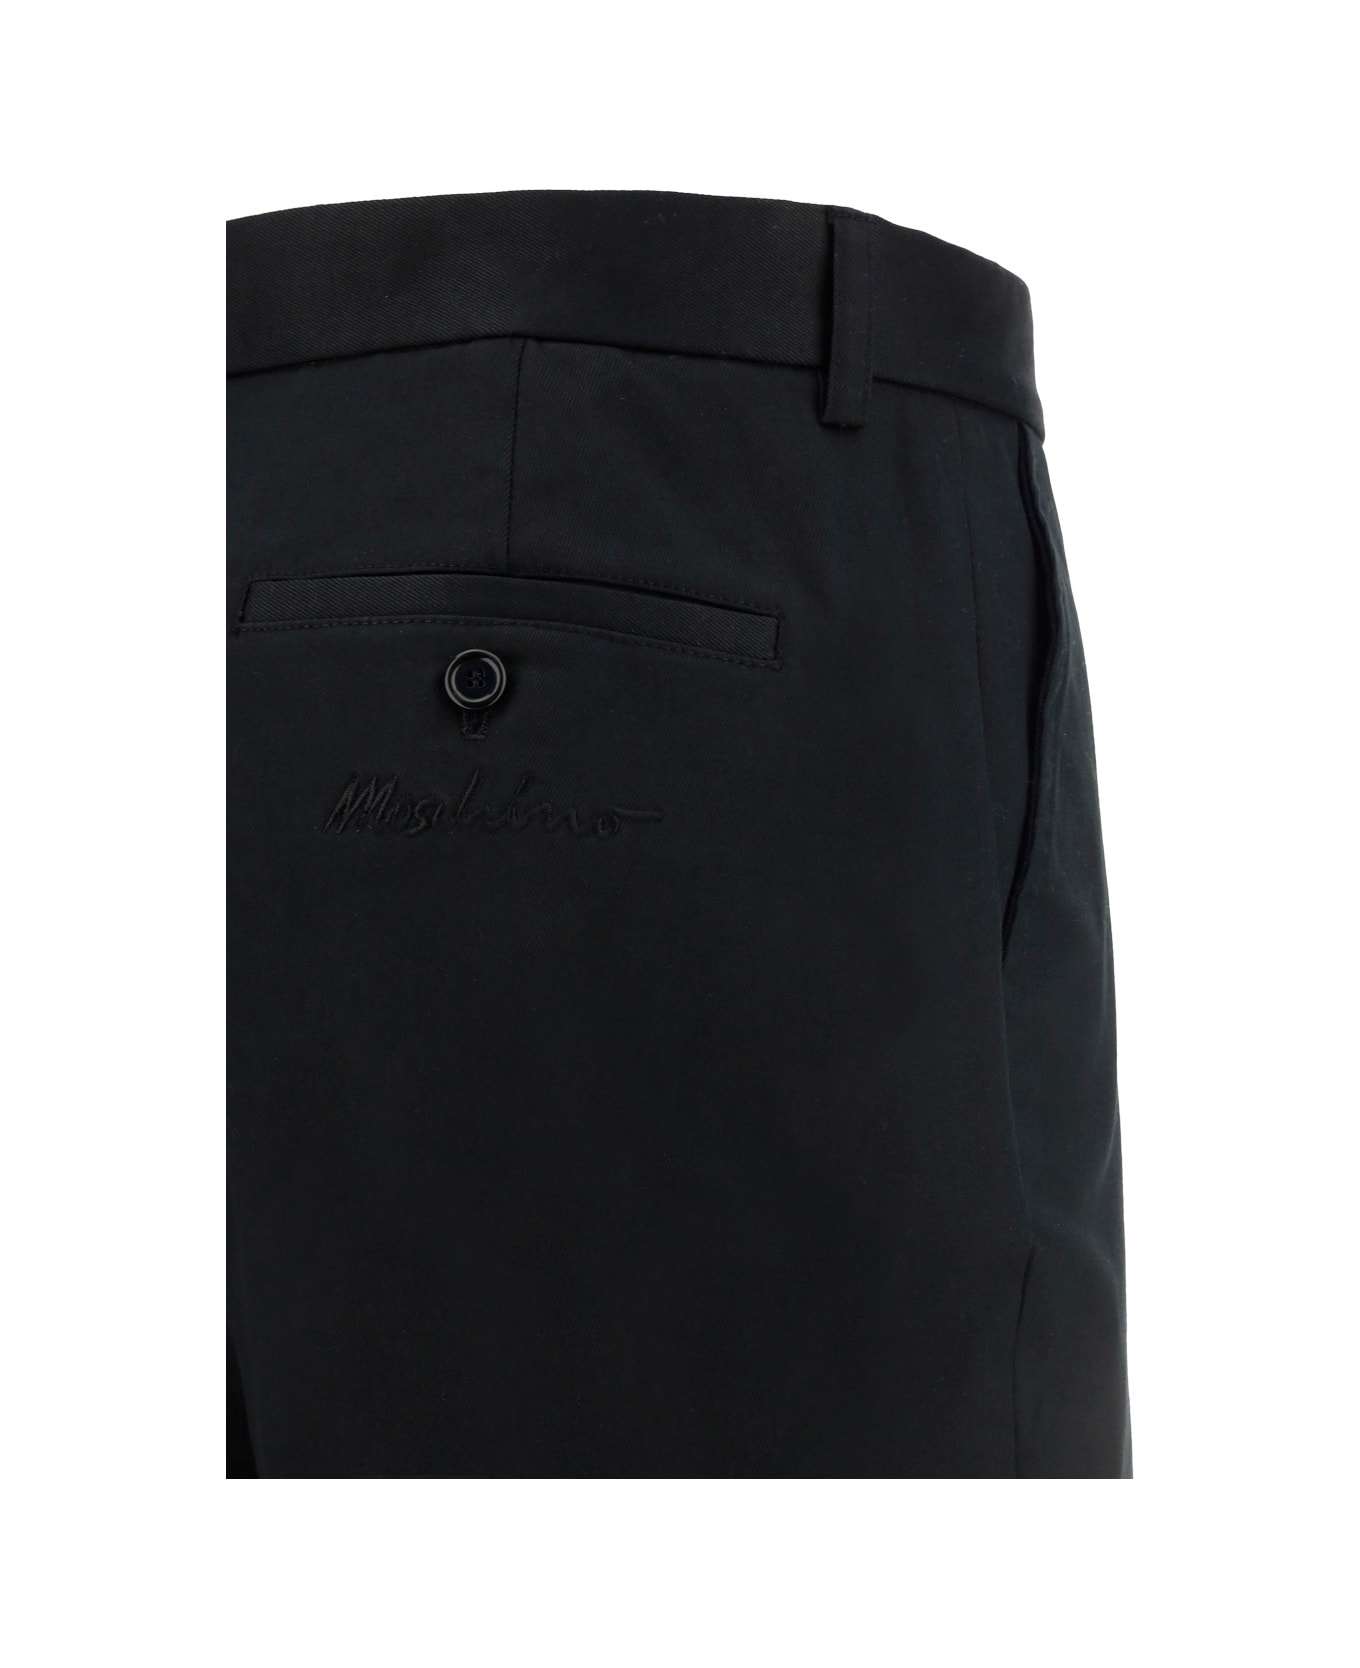 Moschino Shorts - Black